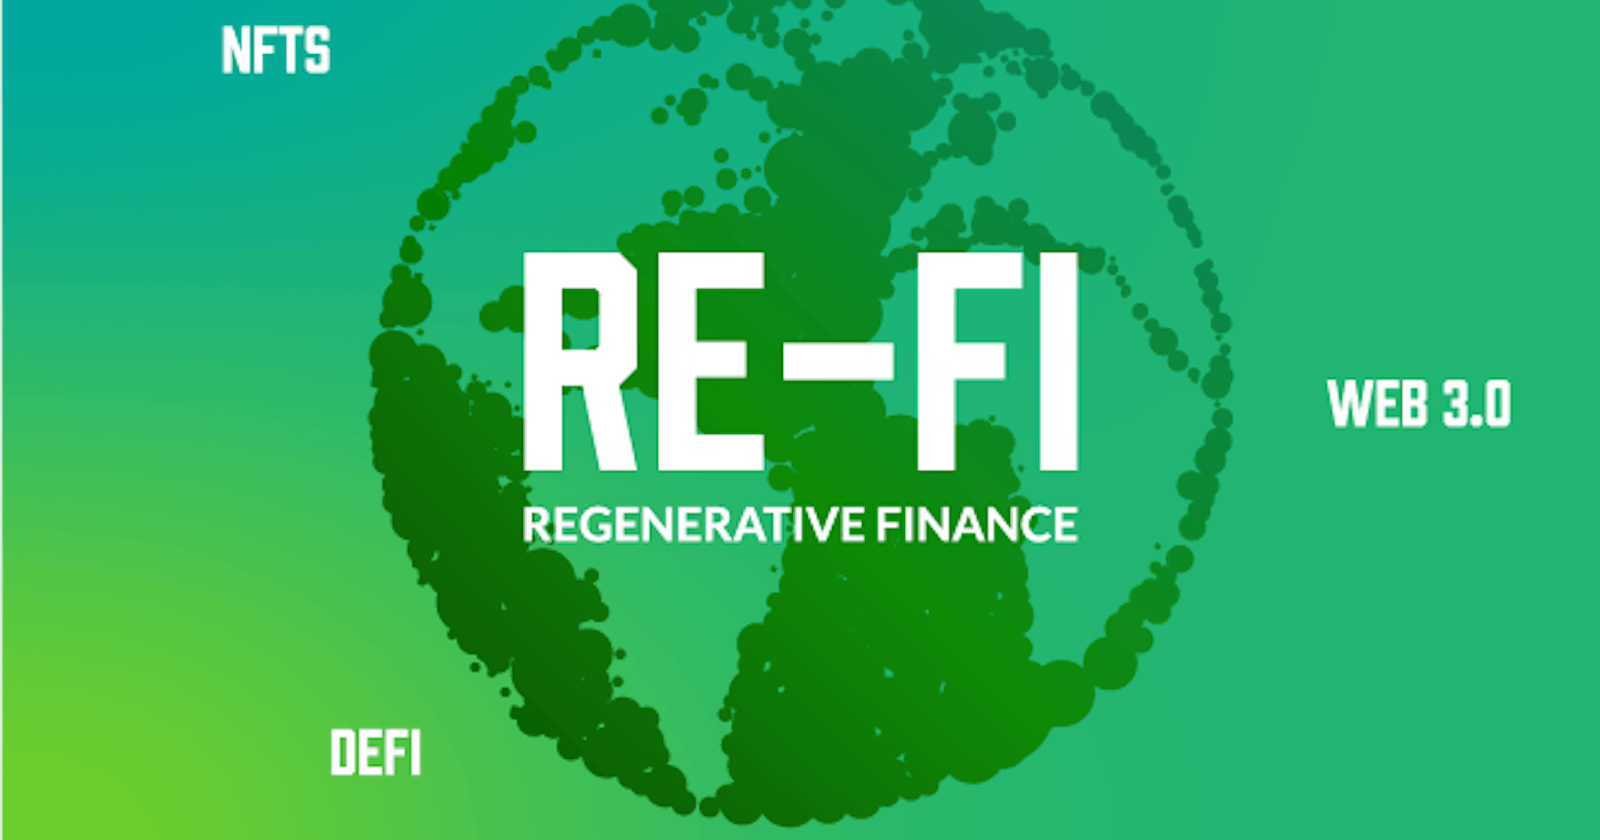 Regenerative finance